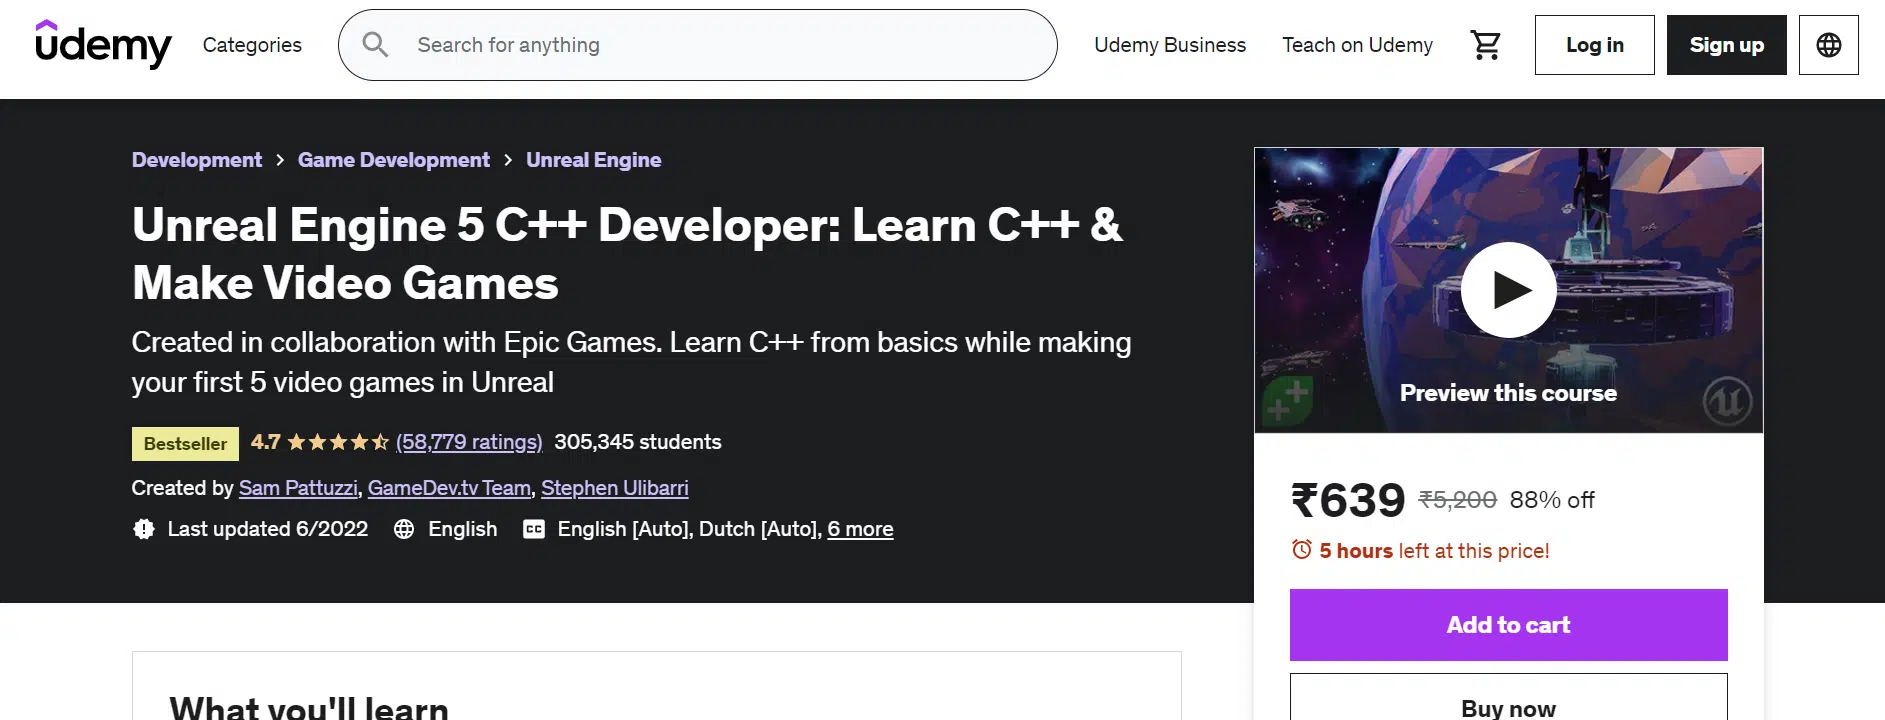 The Unreal Engine C++ Developer Course – Learn C++ & Make Games